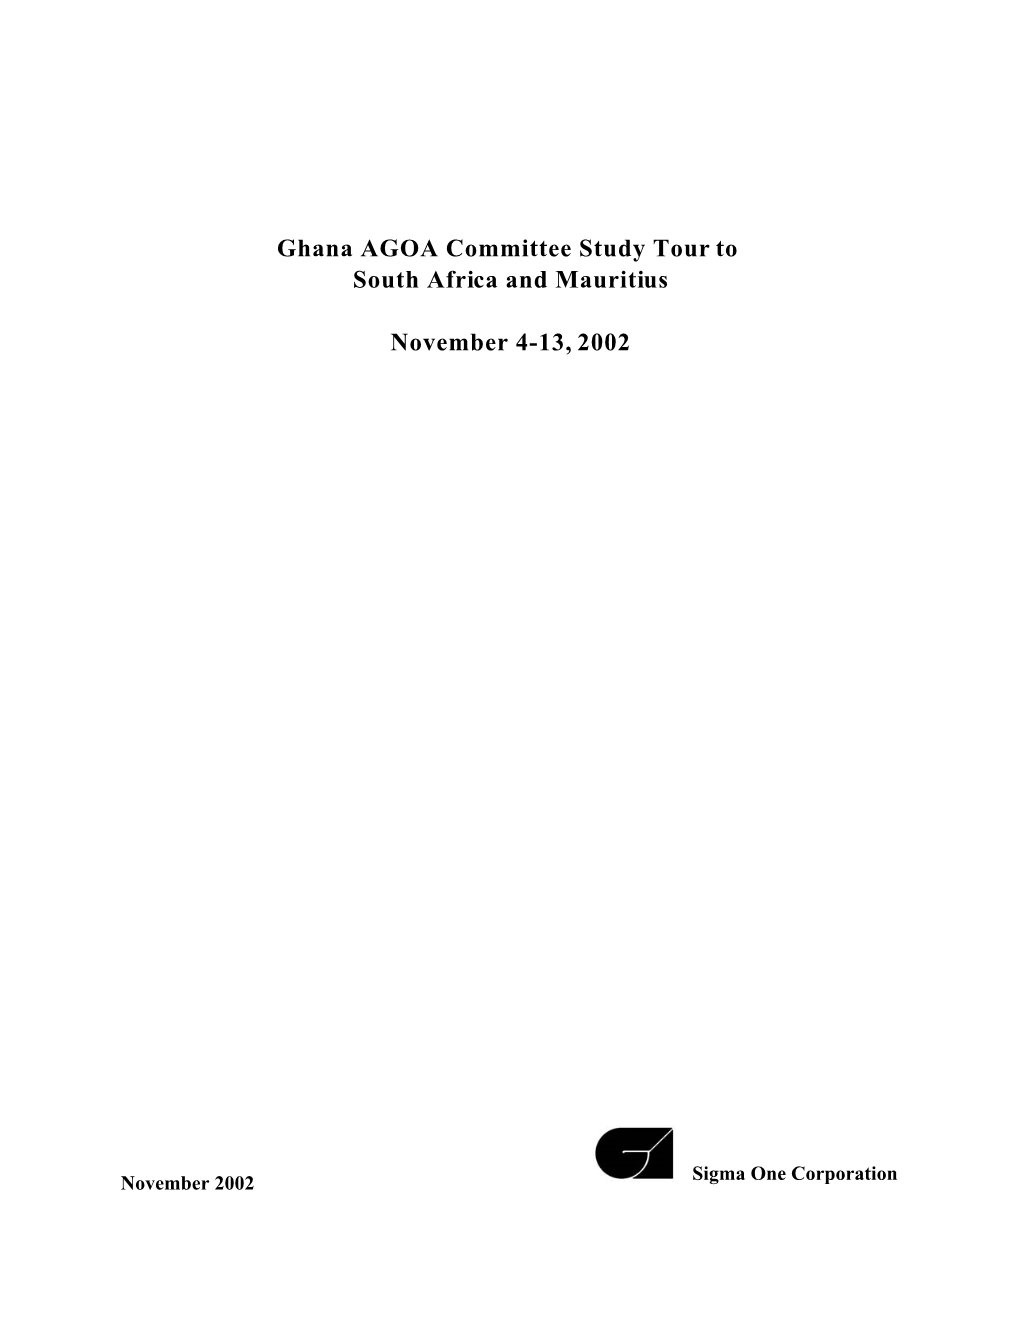 Ghana AGOA Committee Study Tour to South Africa and Mauritius November 4-13, 2002